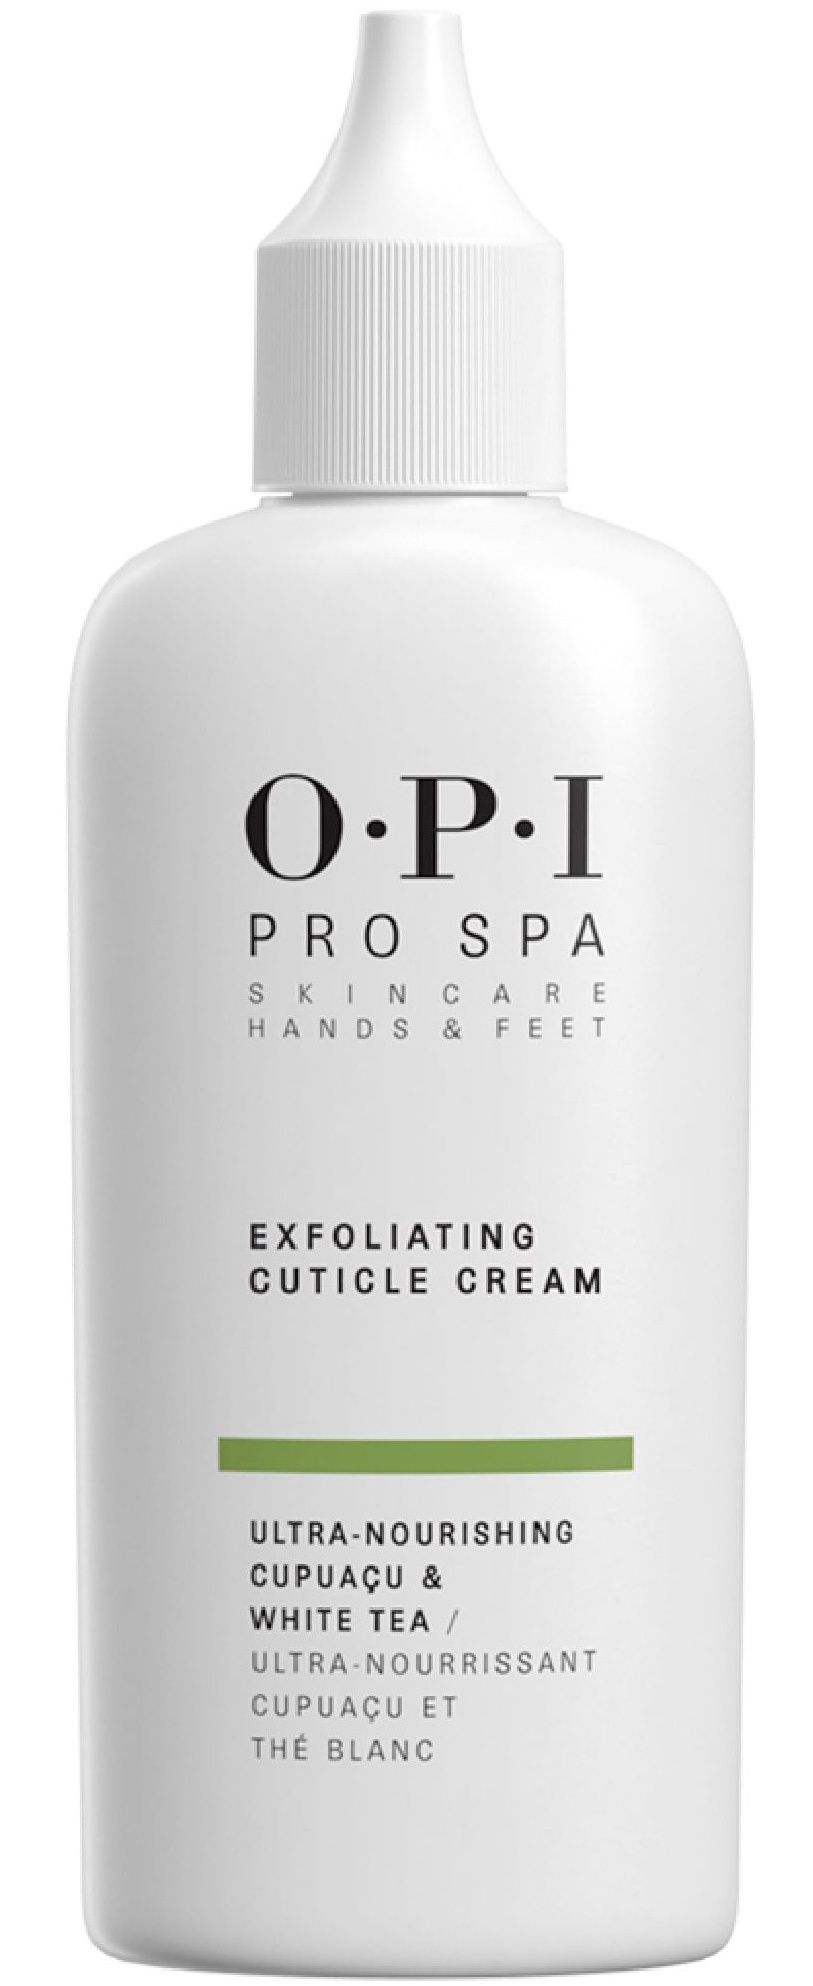 OPI Prospa Exfoliating Cuticle Cream